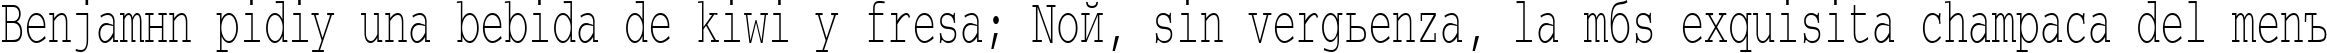 Пример написания шрифтом CourierCTT_60 текста на испанском